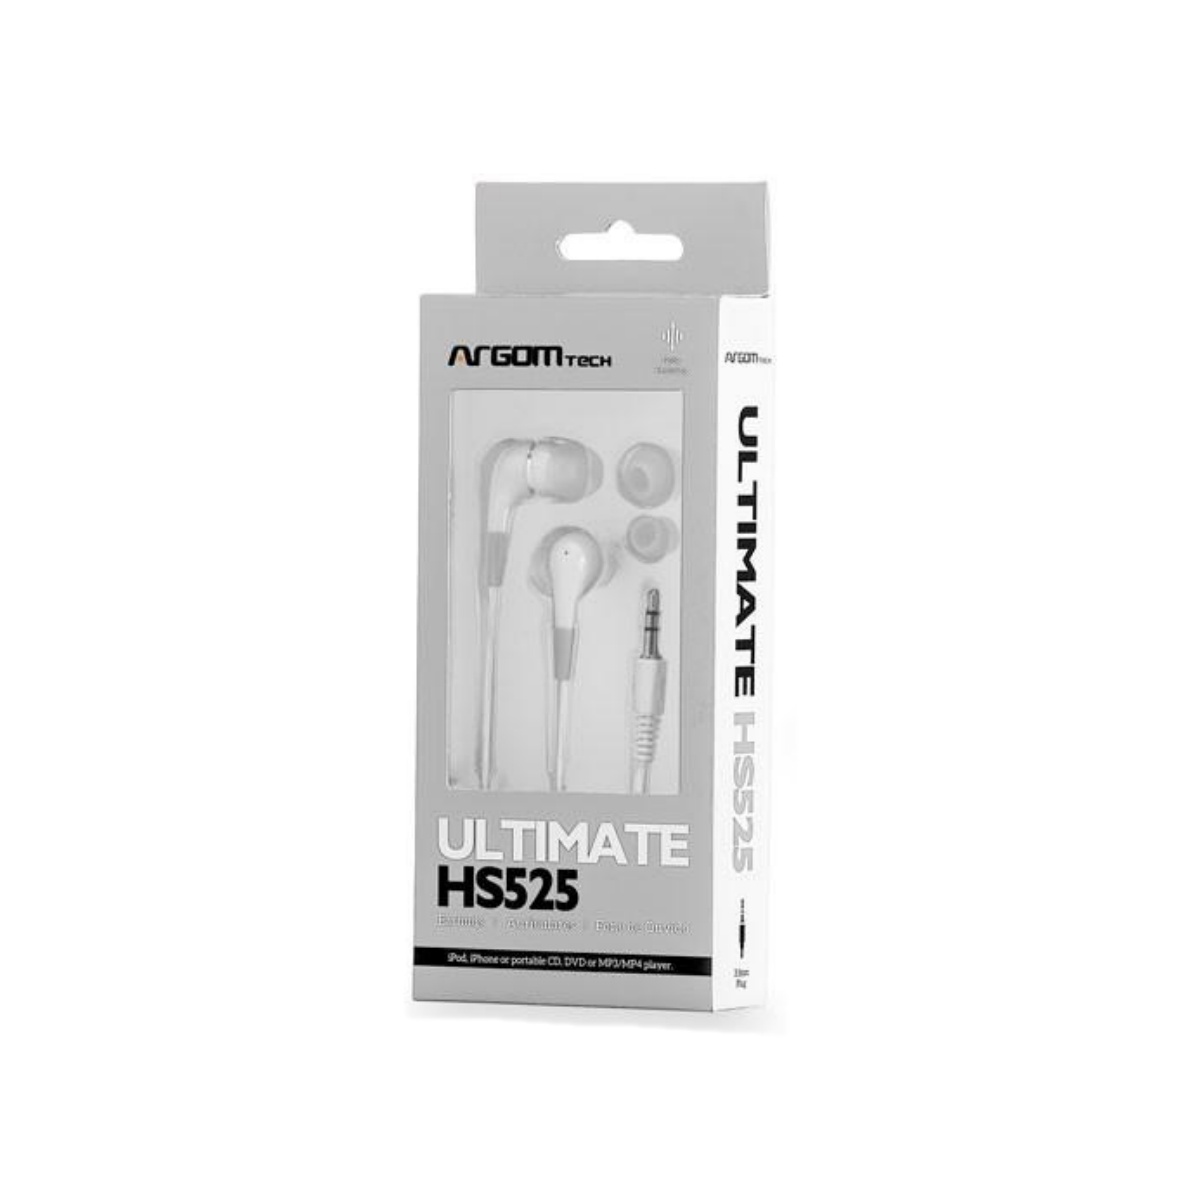 Audifonos Argom 3.5mm In-ear Ultimate HS525 Blanco